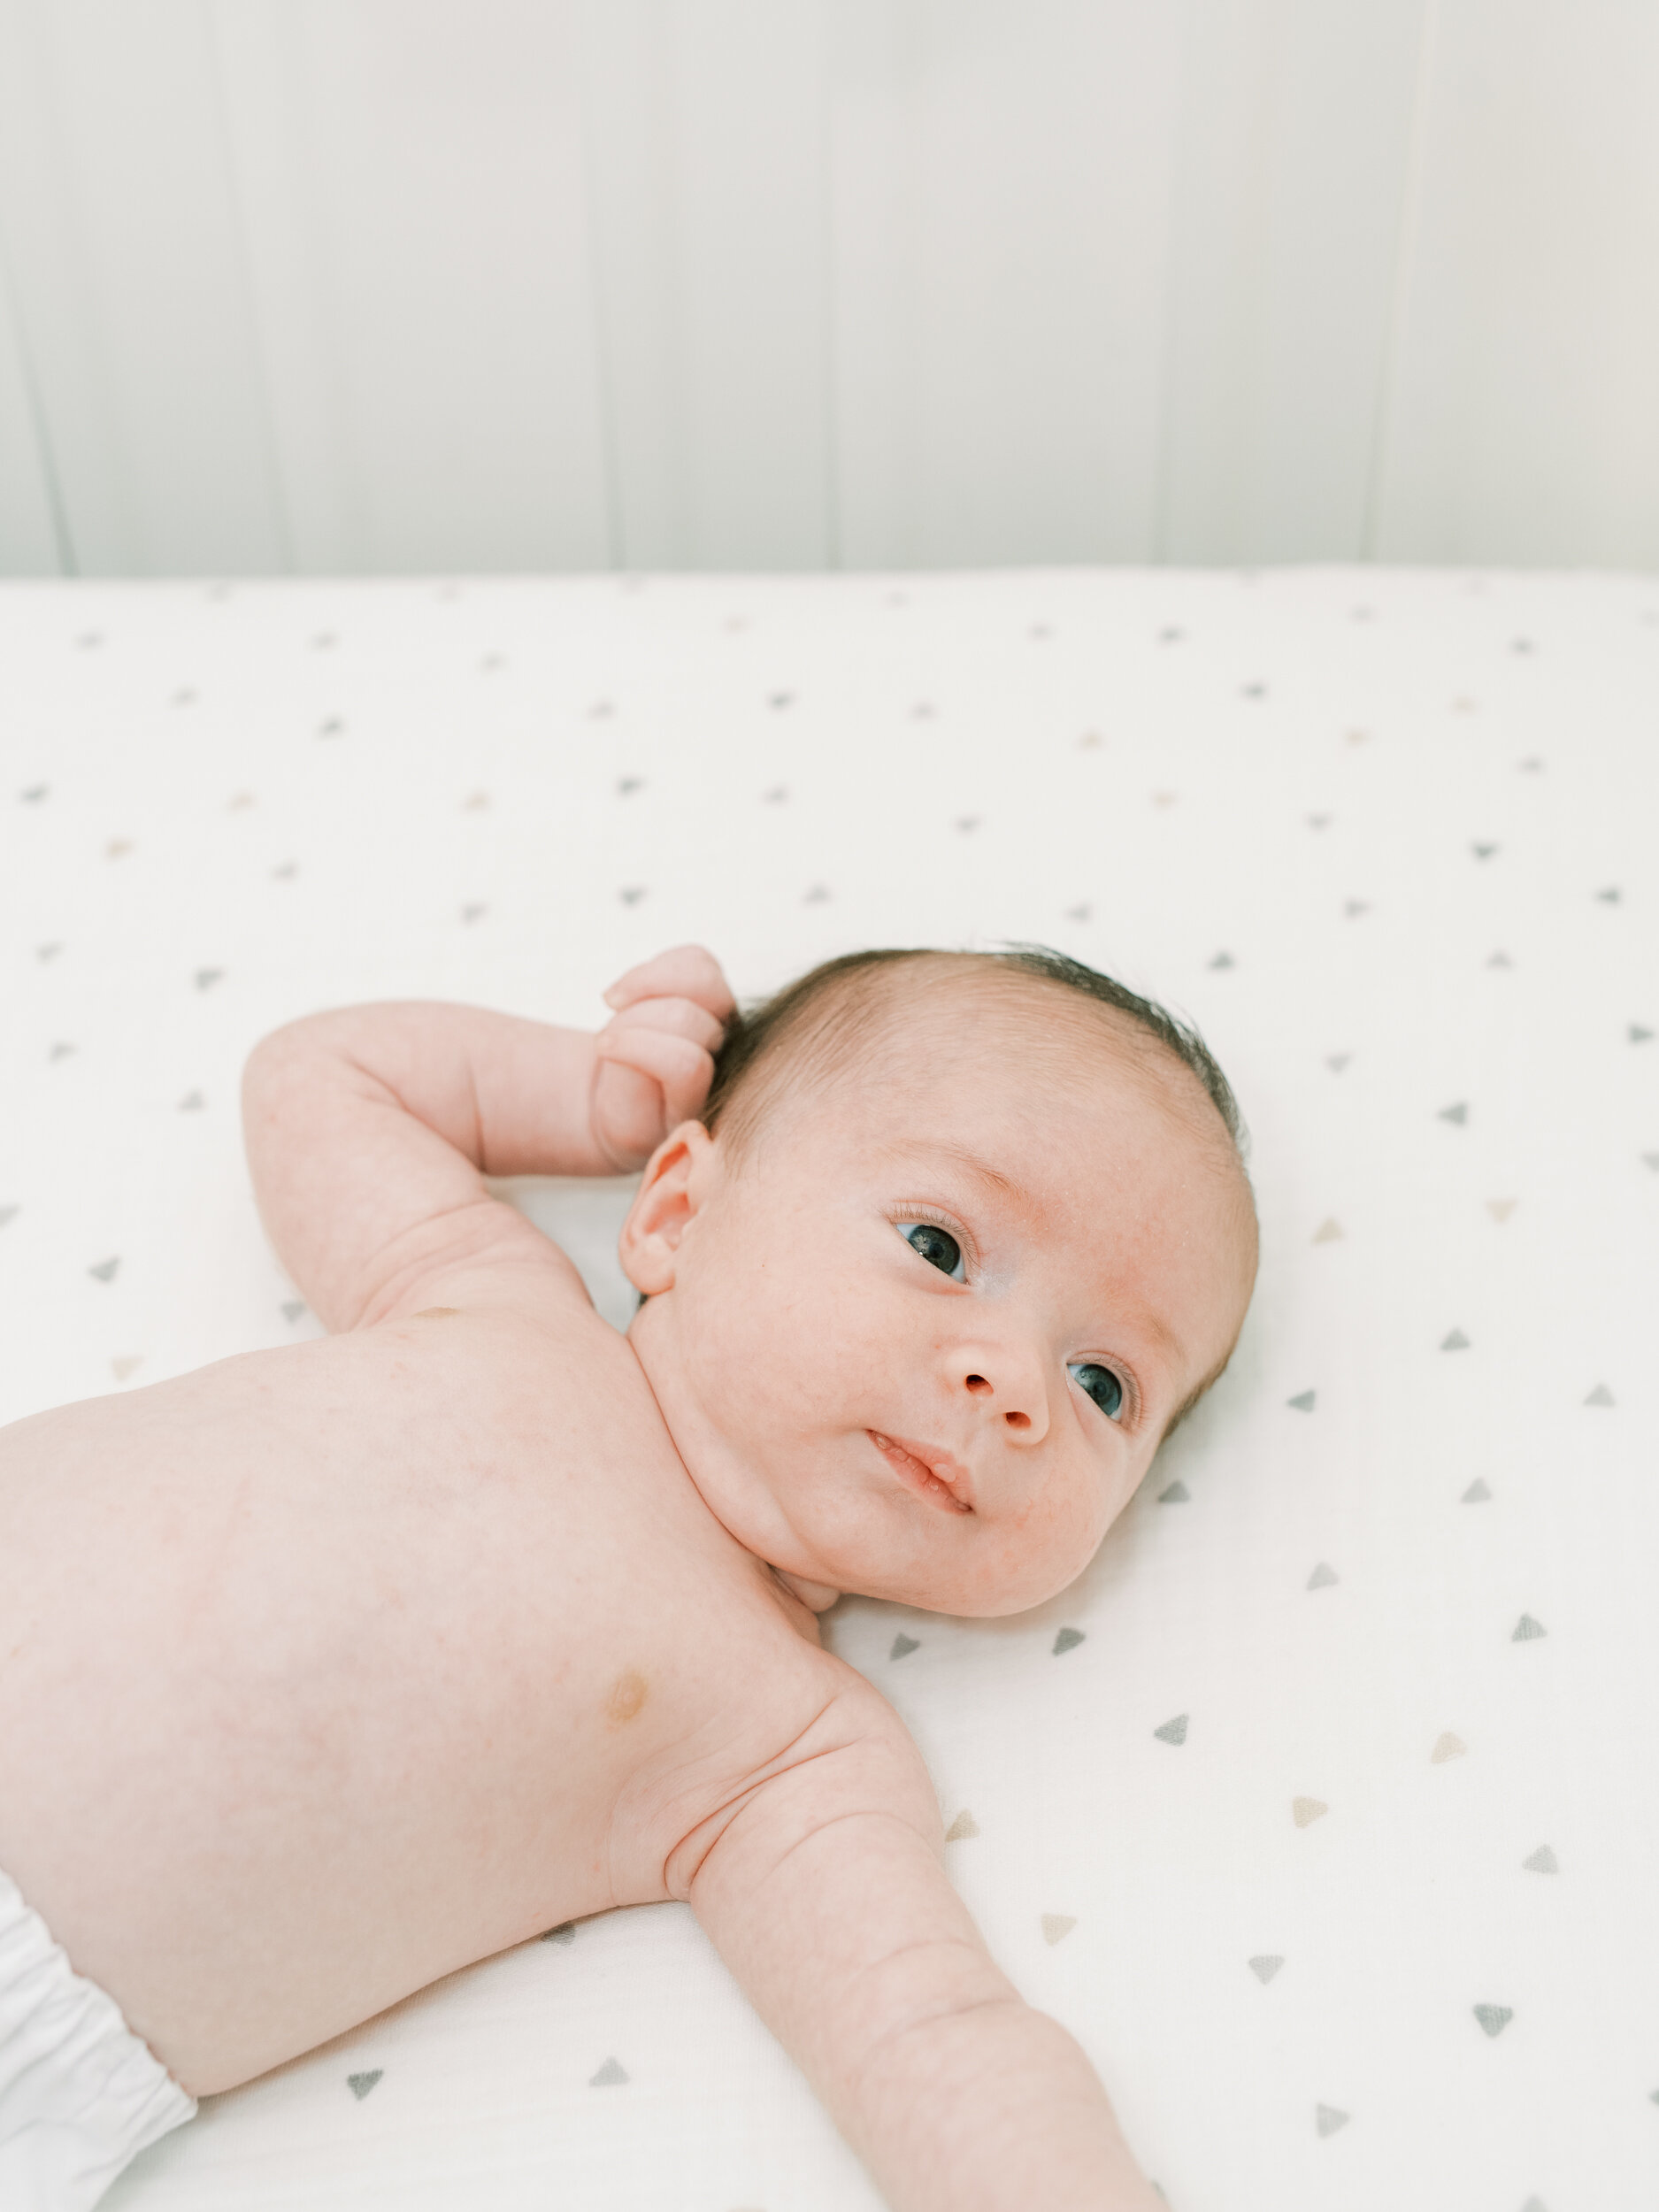 Newborn Baby in Bed in Nursery, Newborn Photography in New York City 